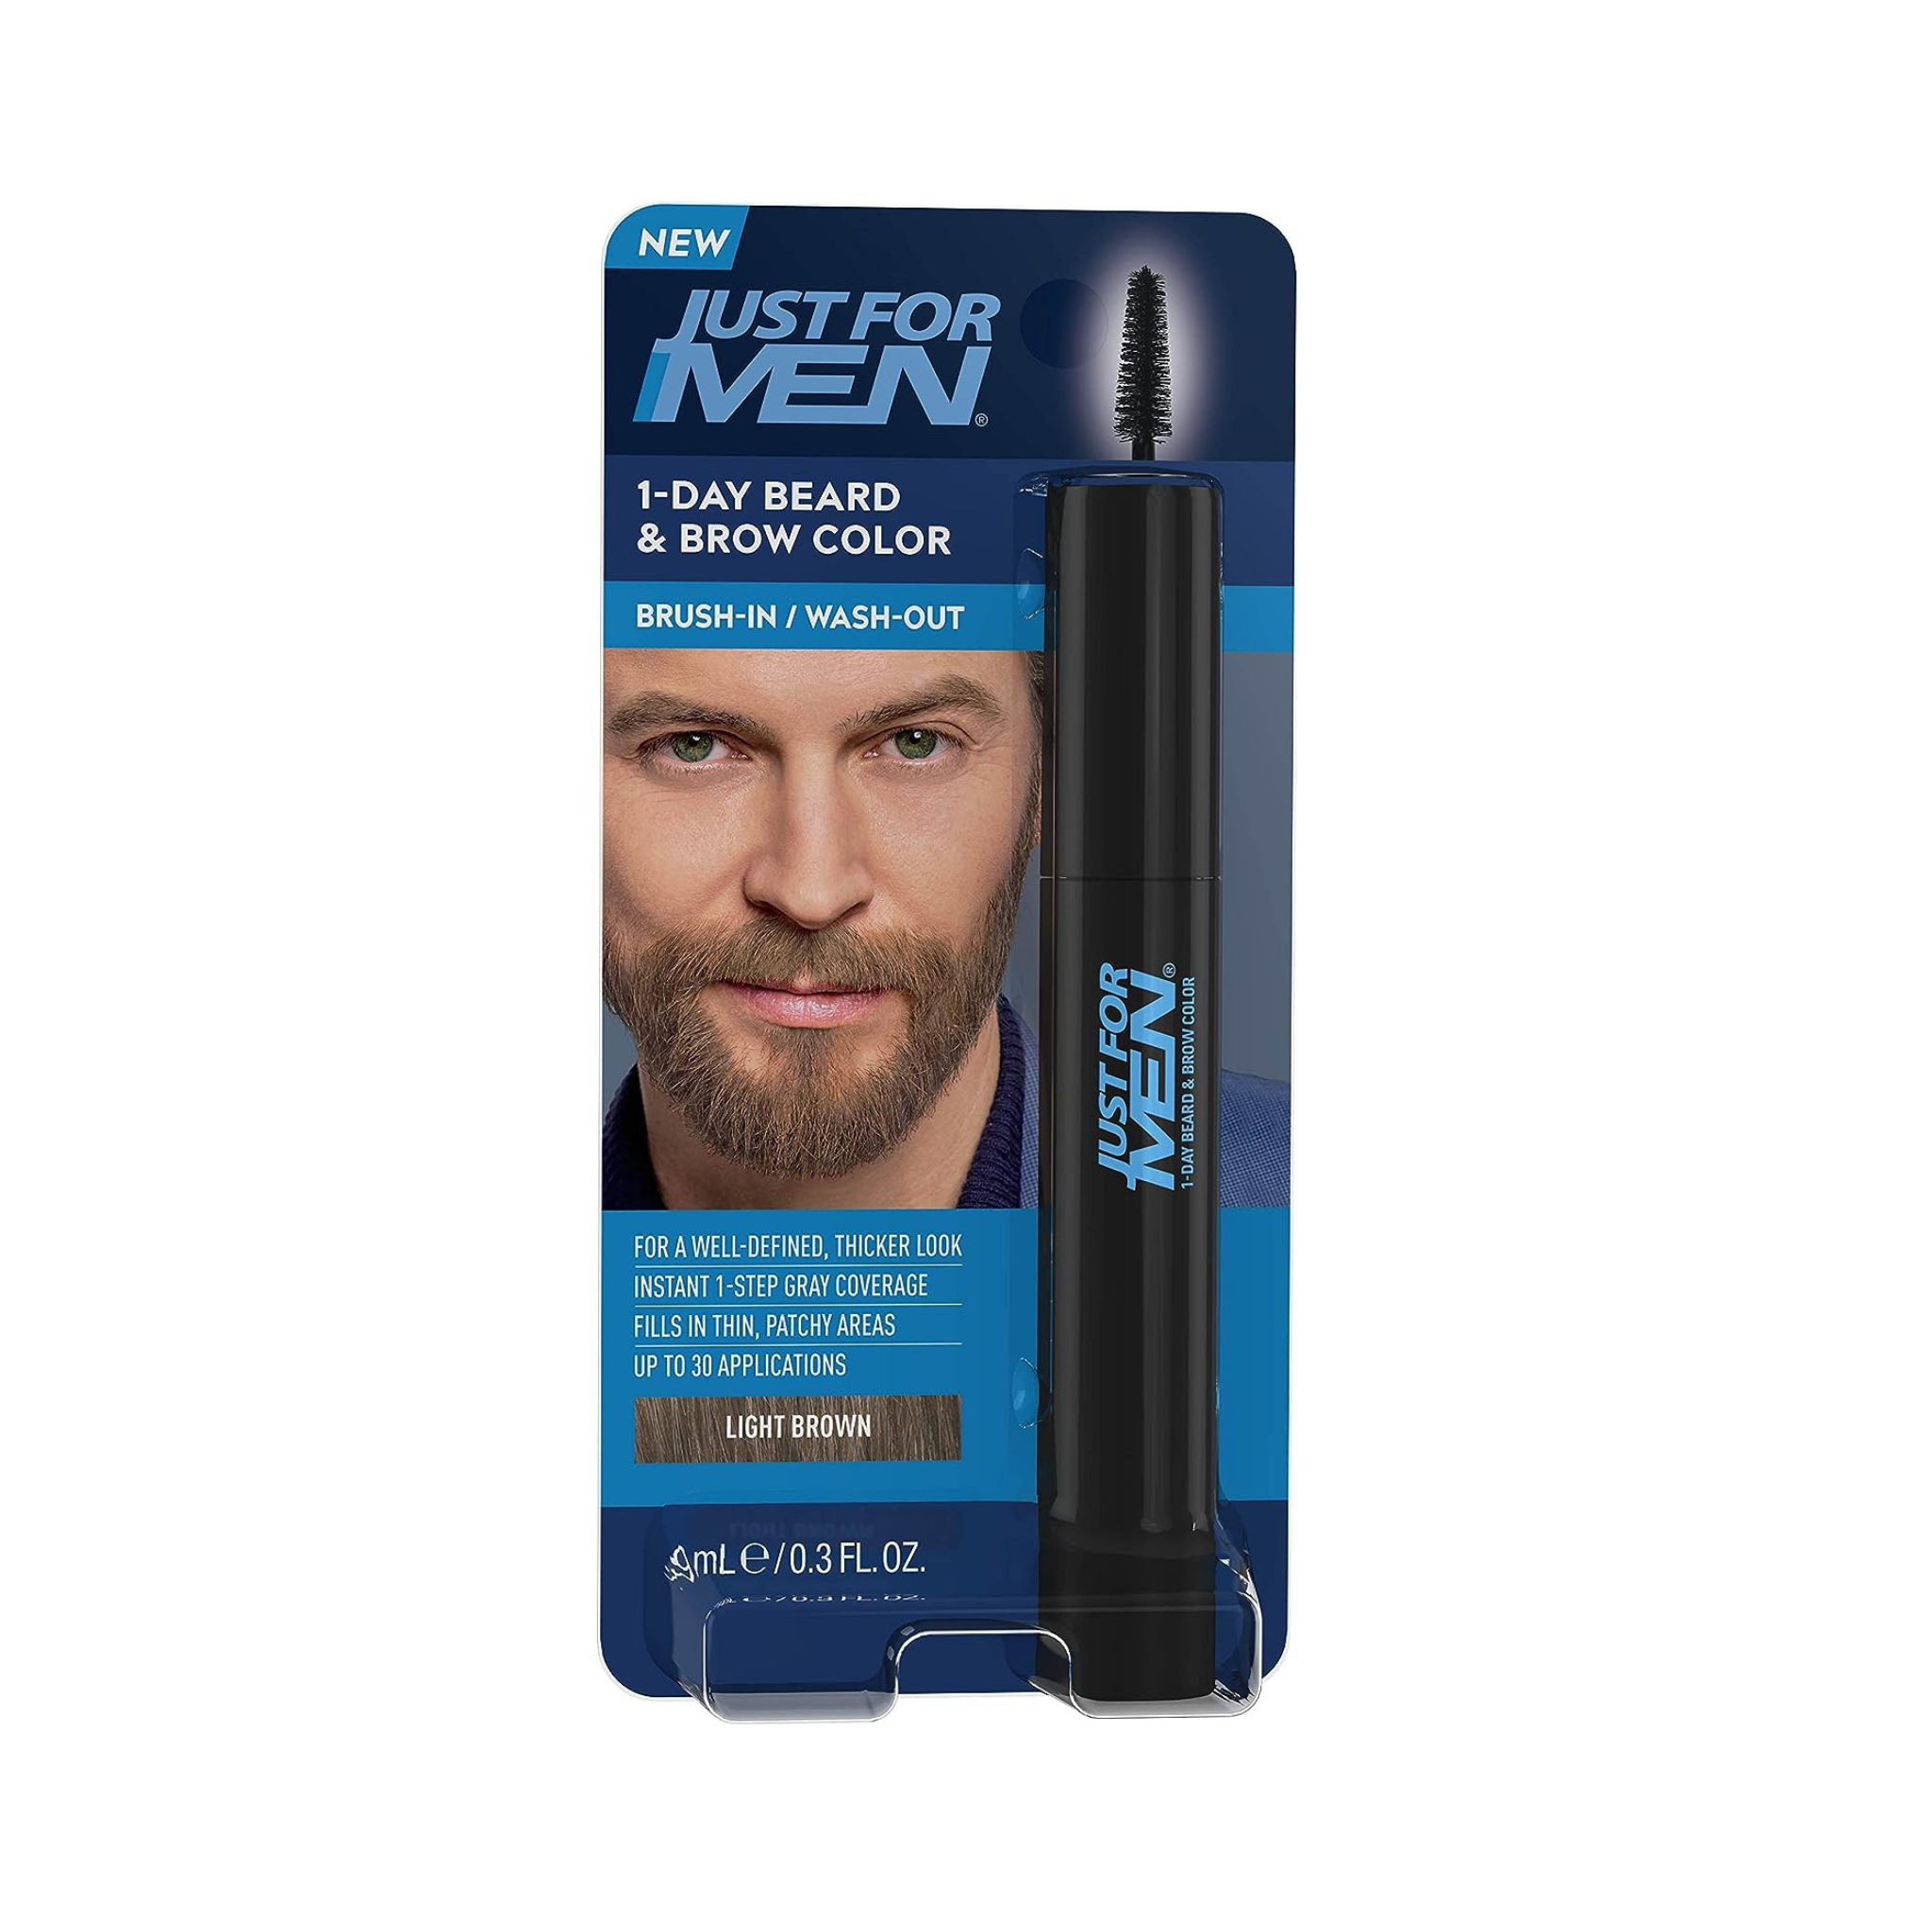 Just for Men Beard & Brow Color Filler Pen